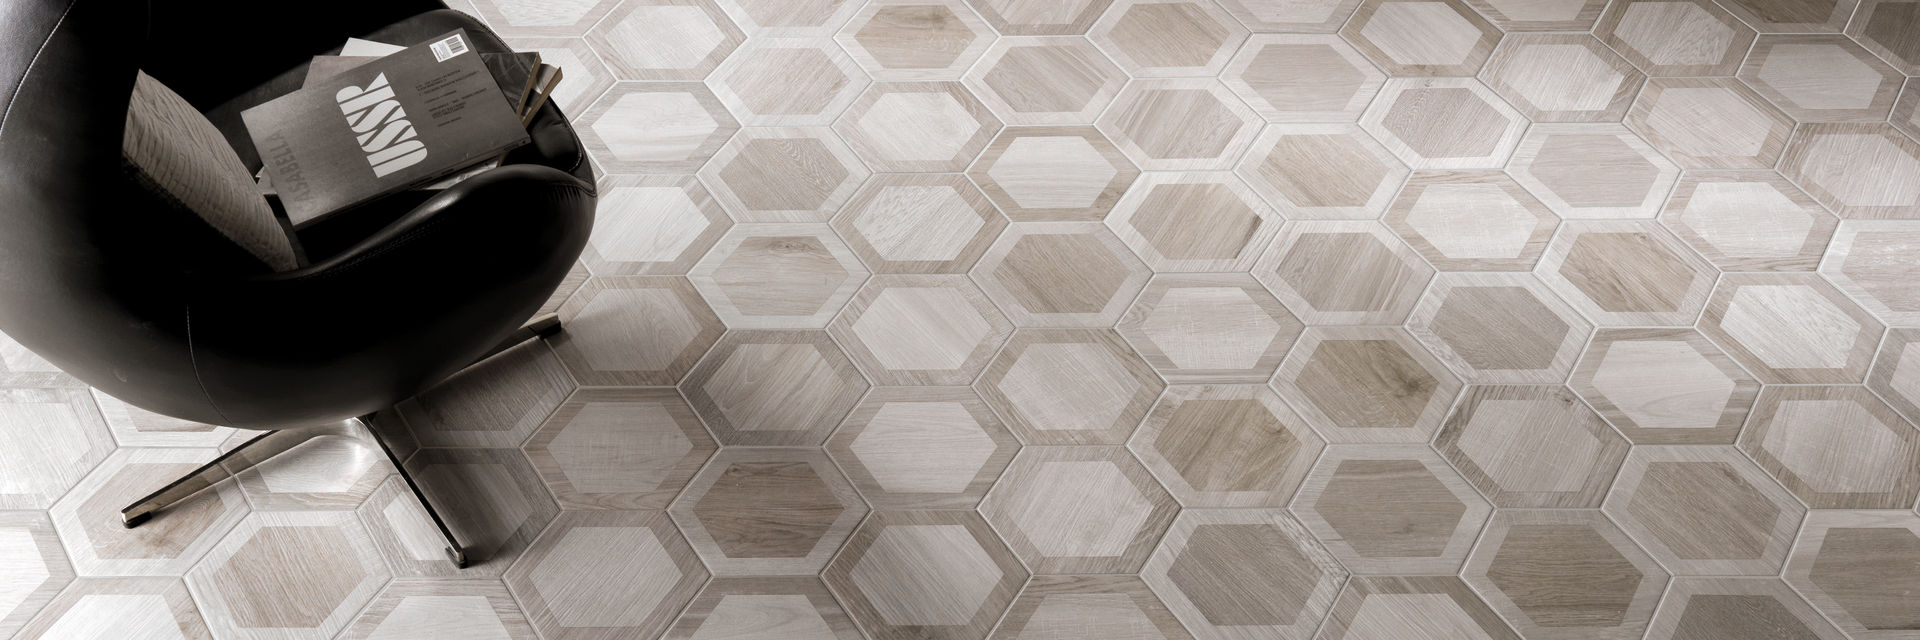 Hexagon Wood, The Baked Tile Company The Baked Tile Company Salon moderne